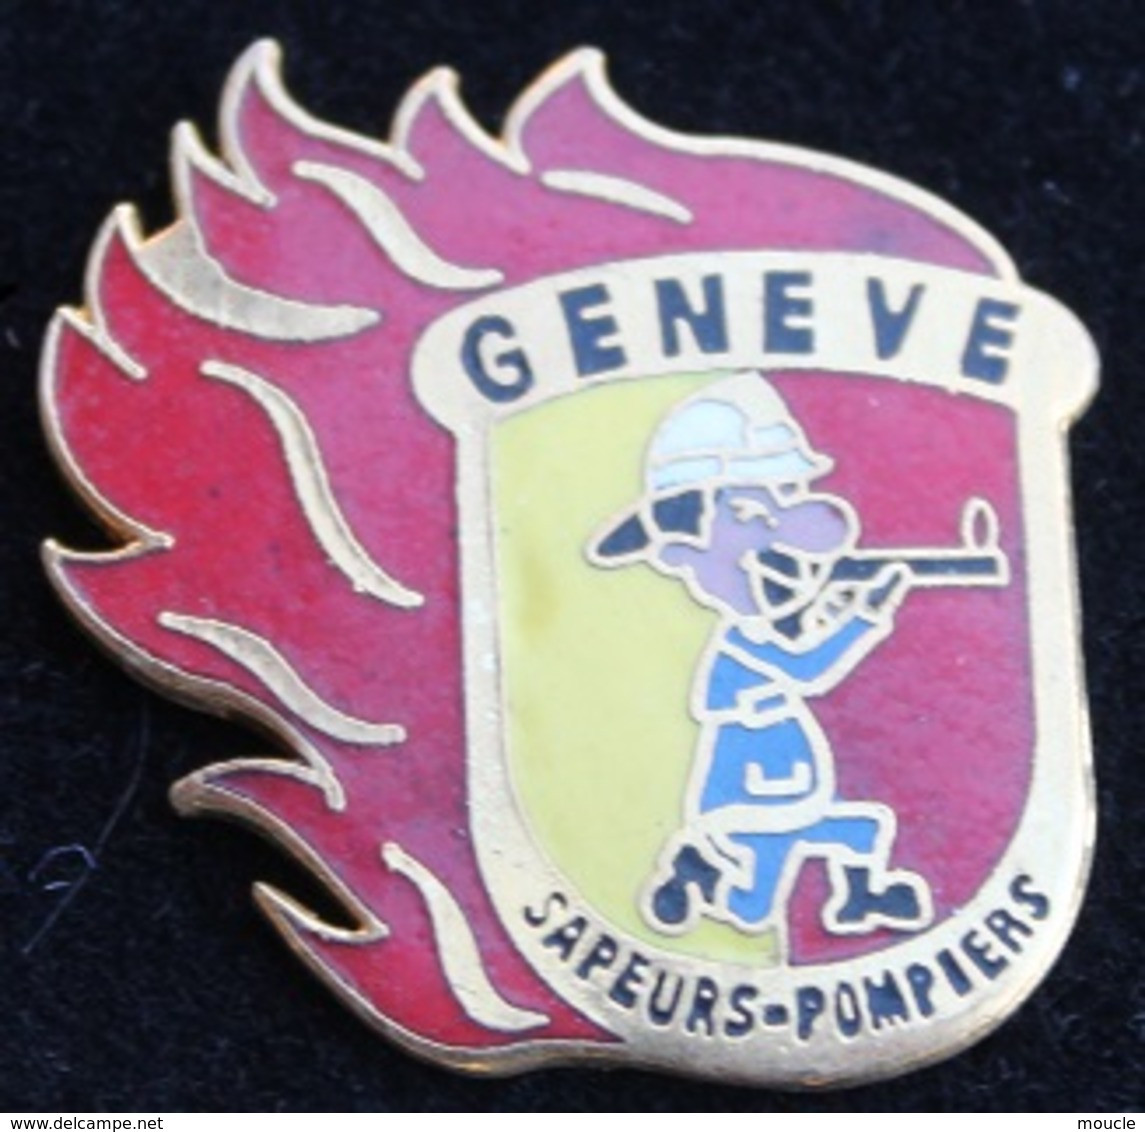 TIR -  SAPEURS POMPIERS DE LA VILLE GENEVE - SUISSE-SCHWEIZER FEUERWEHRMANN-FIREFIGHTER SWISS -   (21) - Feuerwehr